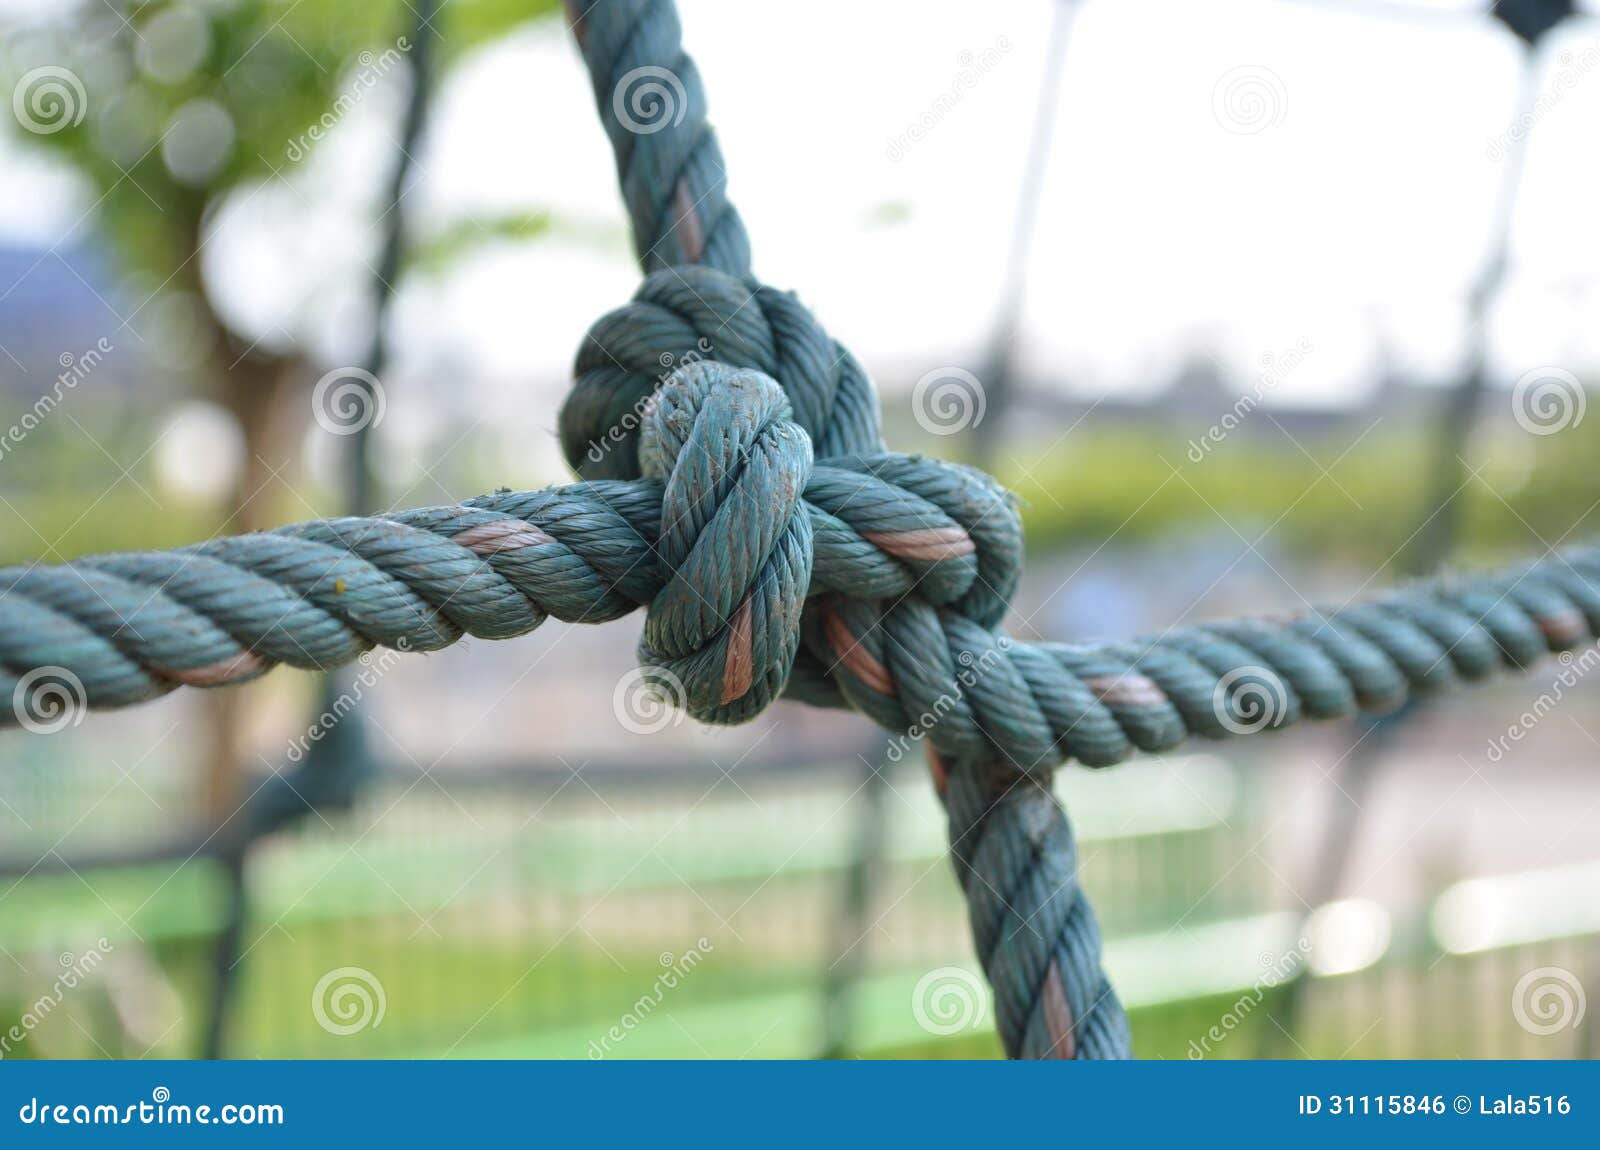 binding rope